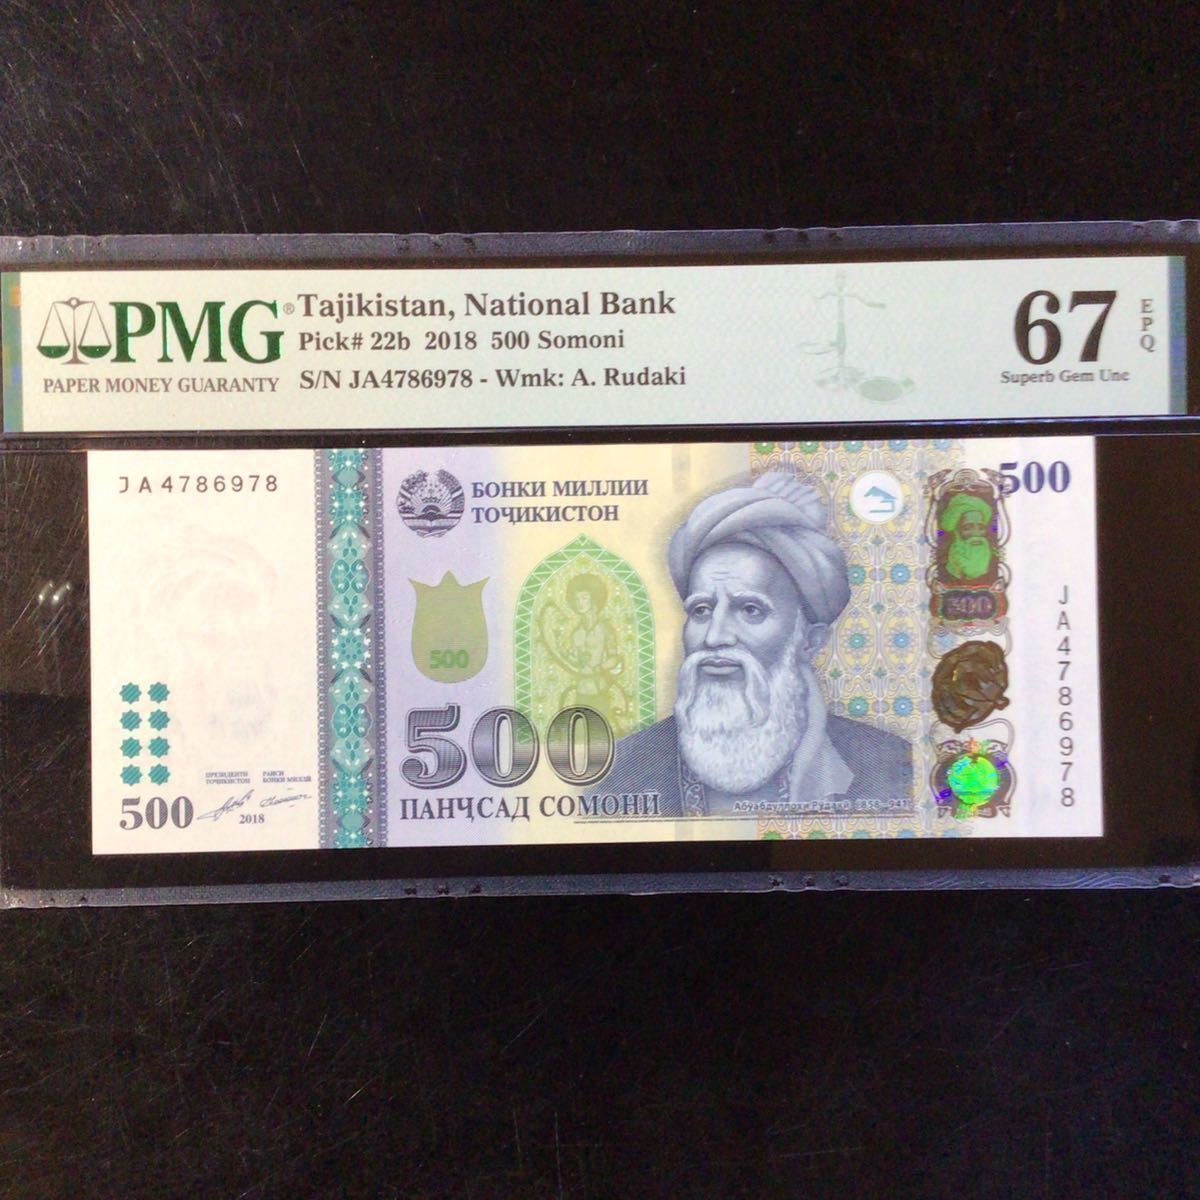 World Banknote Grading TAJIKISTAN《 National Bank 》500 Somoni【2018】『PMG Grading Superb Gem Uncirculated 67 EPQ』